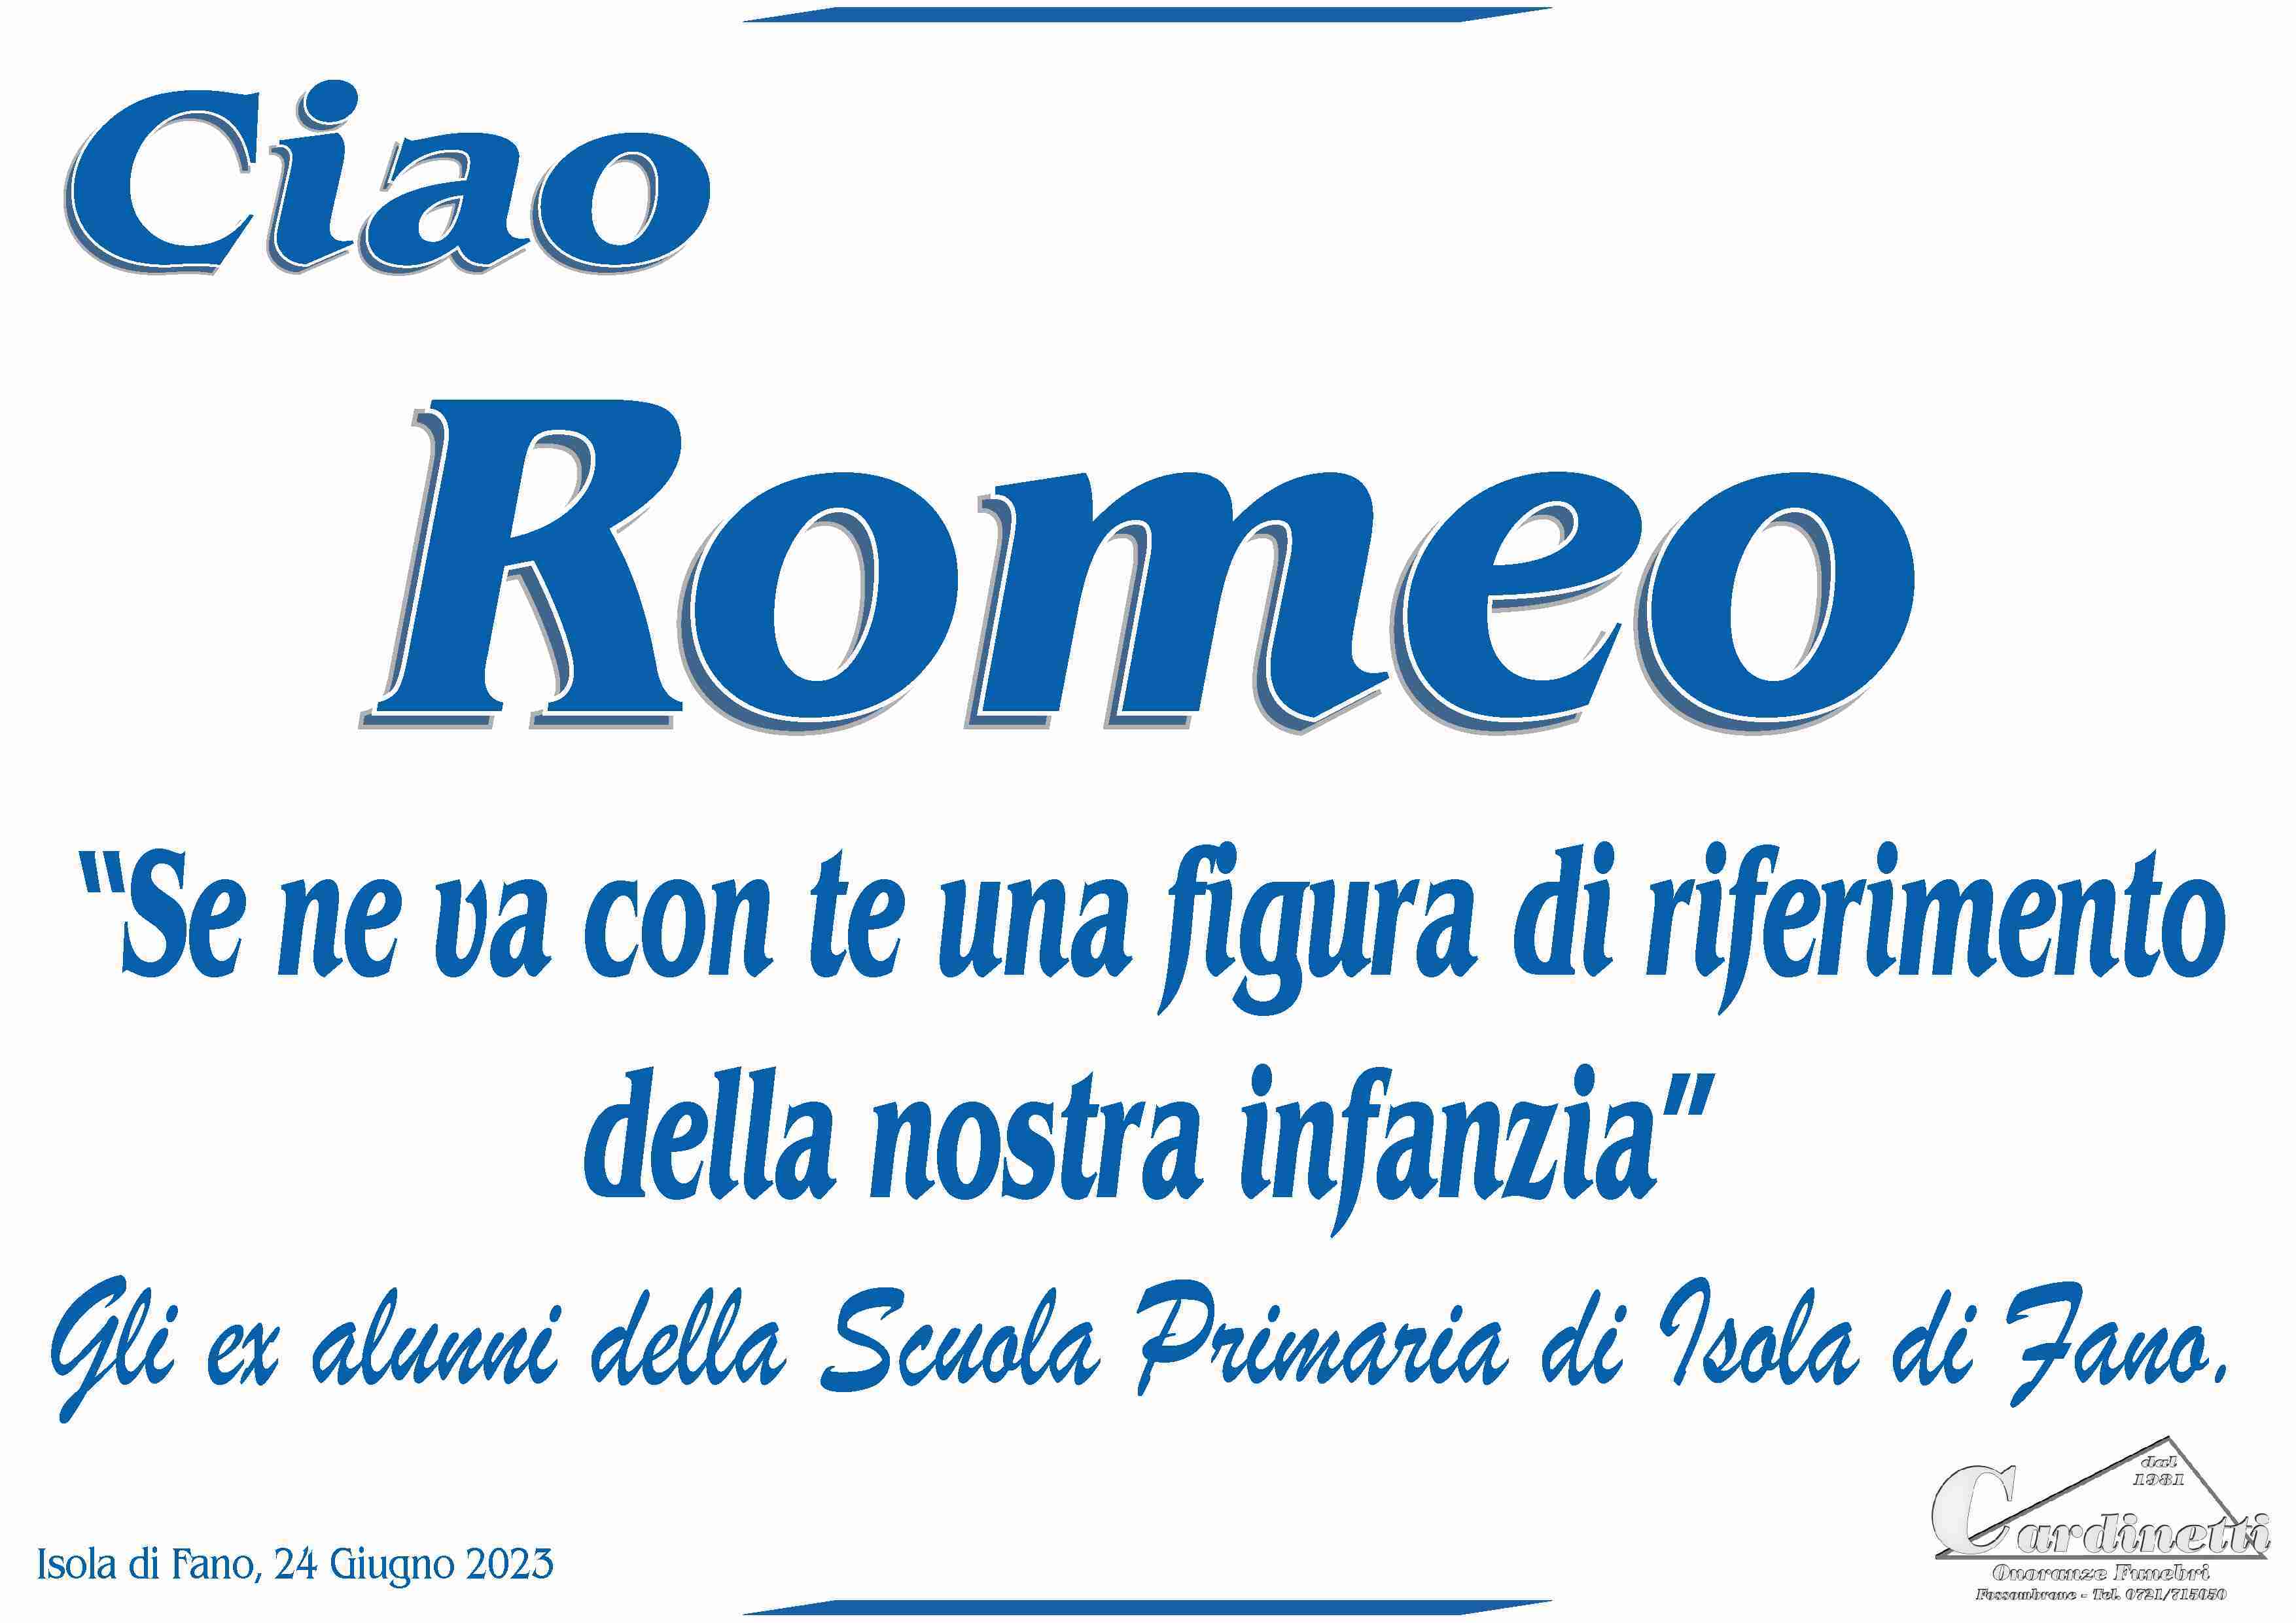 Romeo Valdarchi